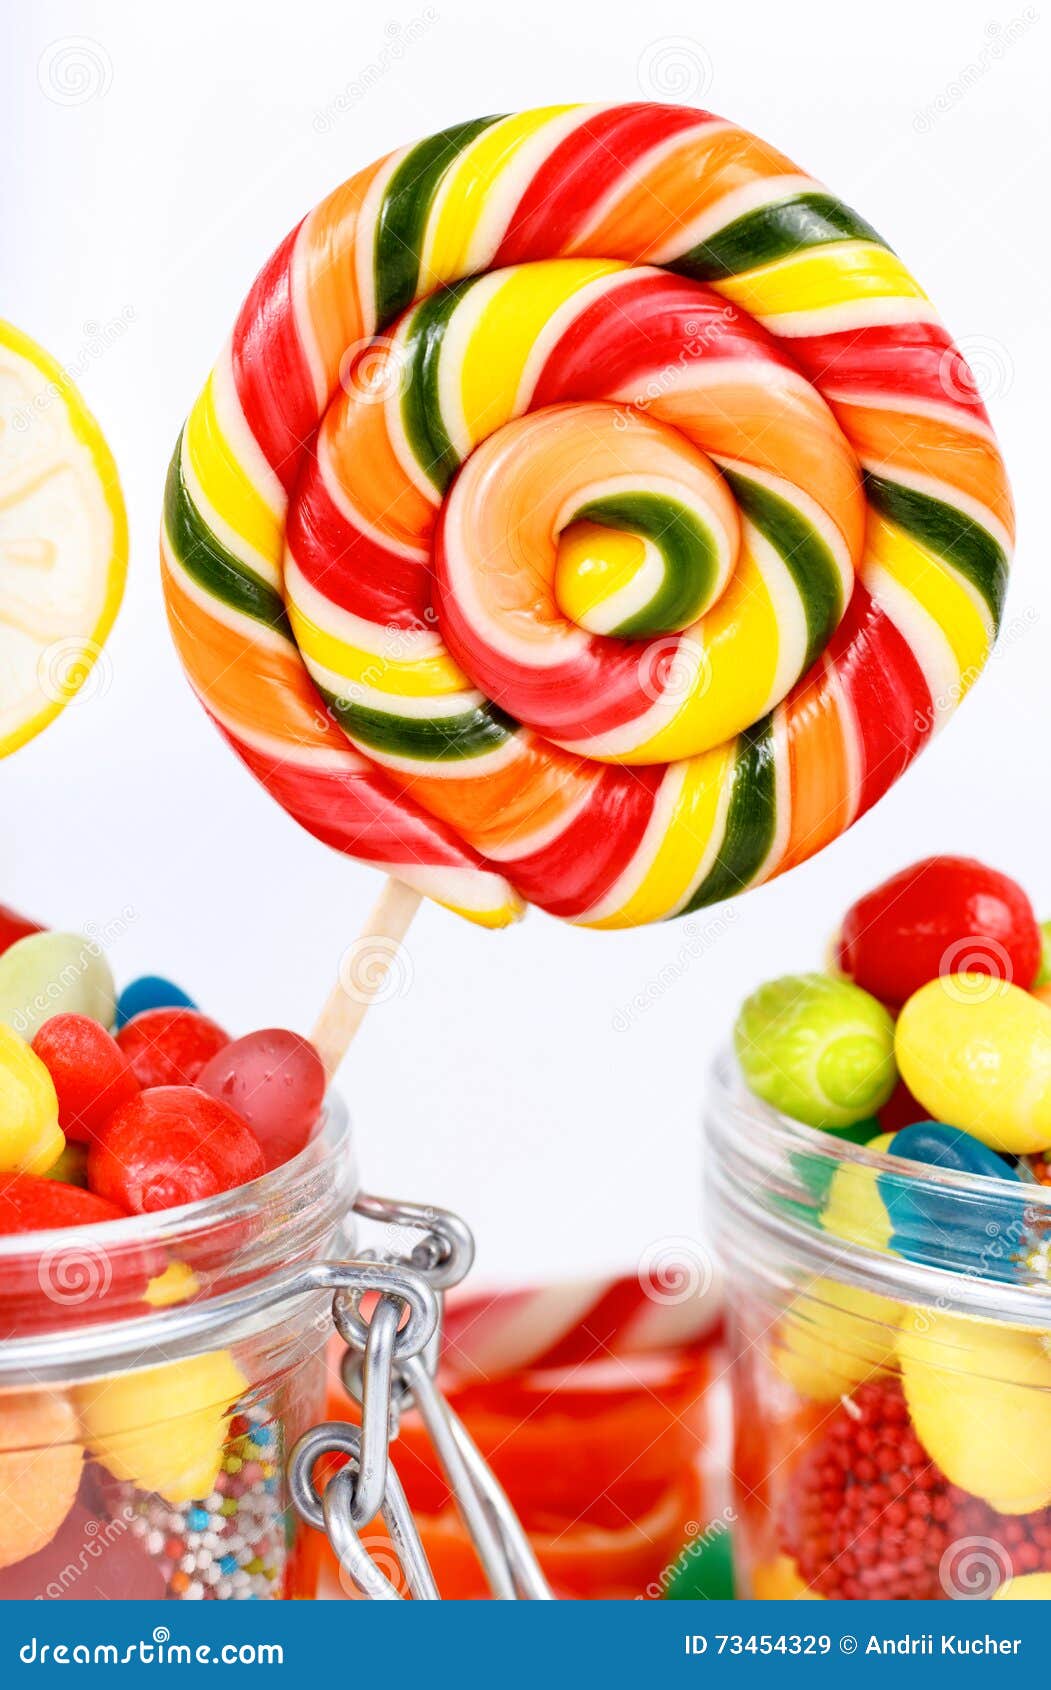 How Do They Put Gum Inside a Lollipop?